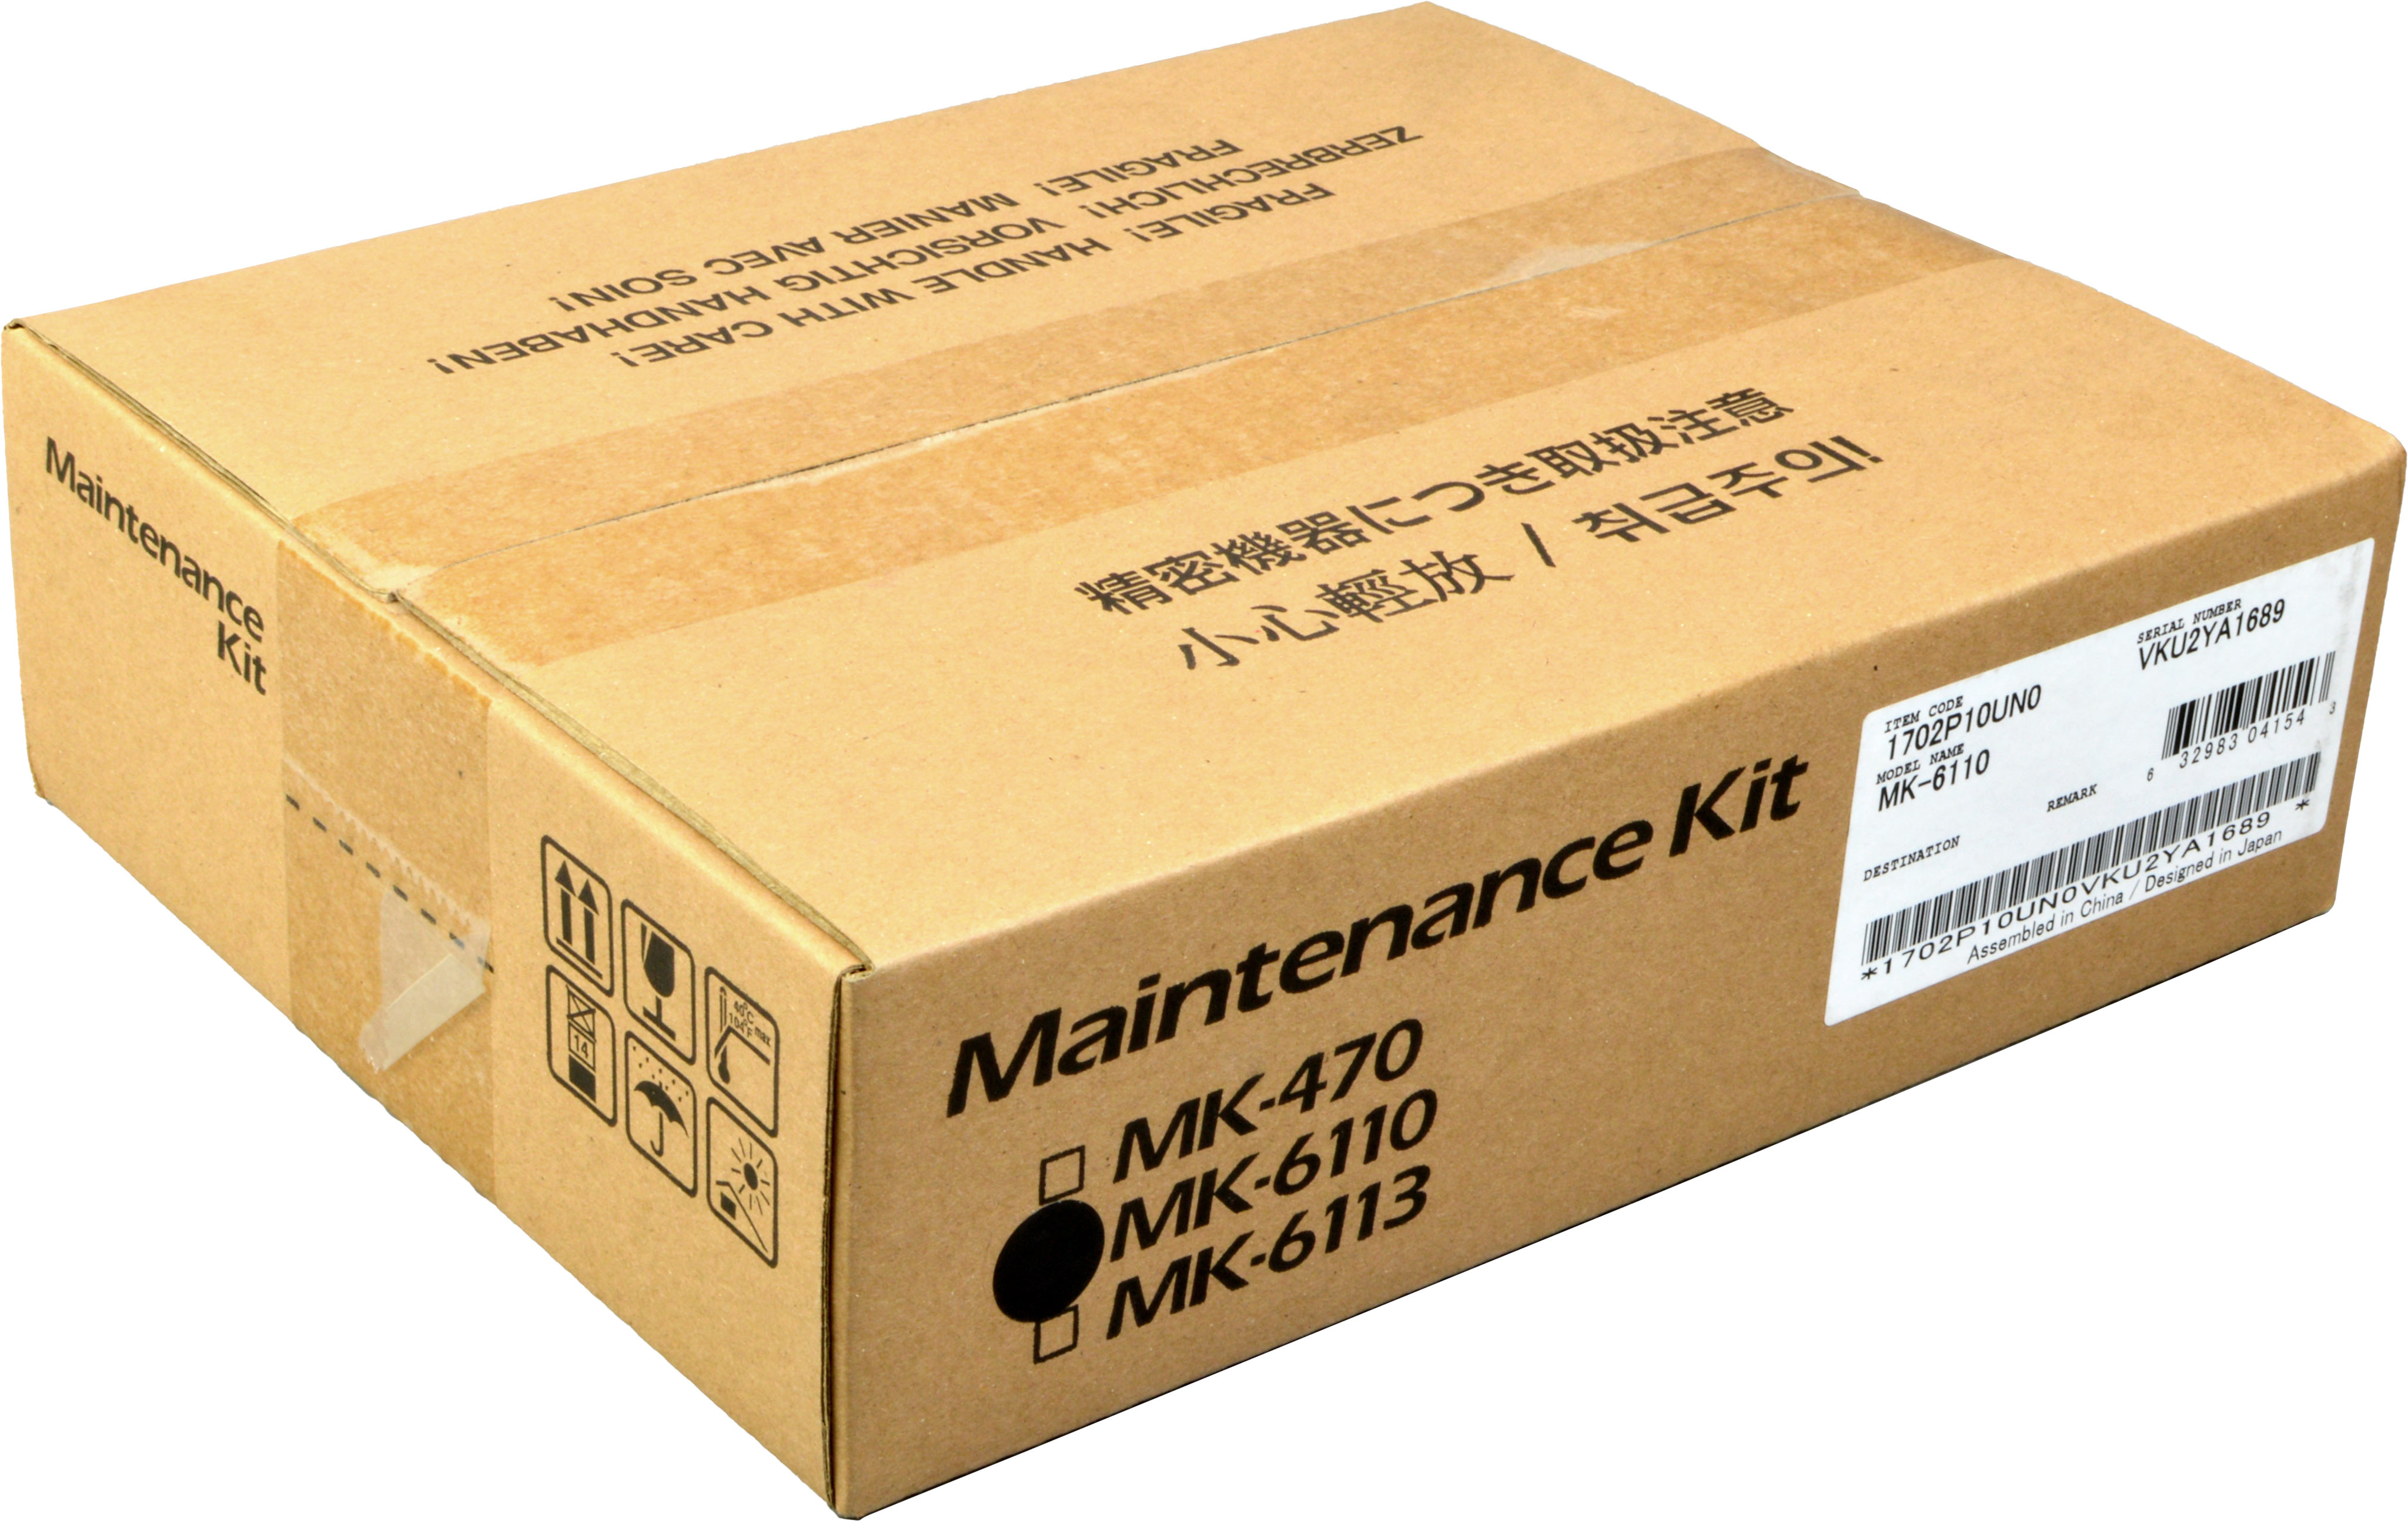 Kyocera Maintenance Kit MK-6110  1702P10UN0